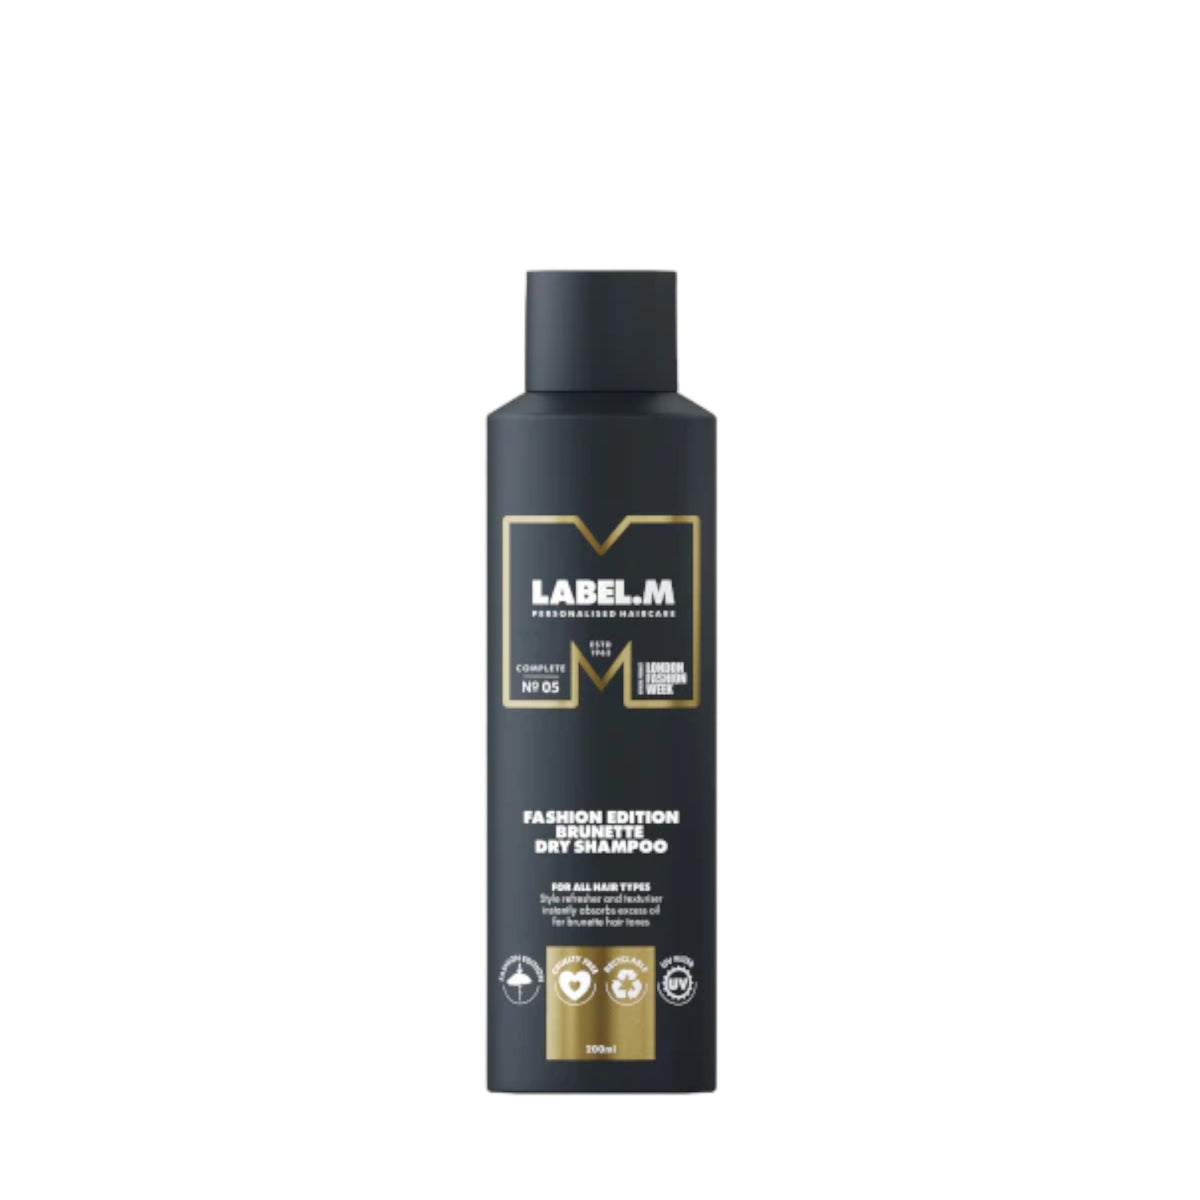 Label.m Brunette Fashion Edition Dry Shampoo 200ml